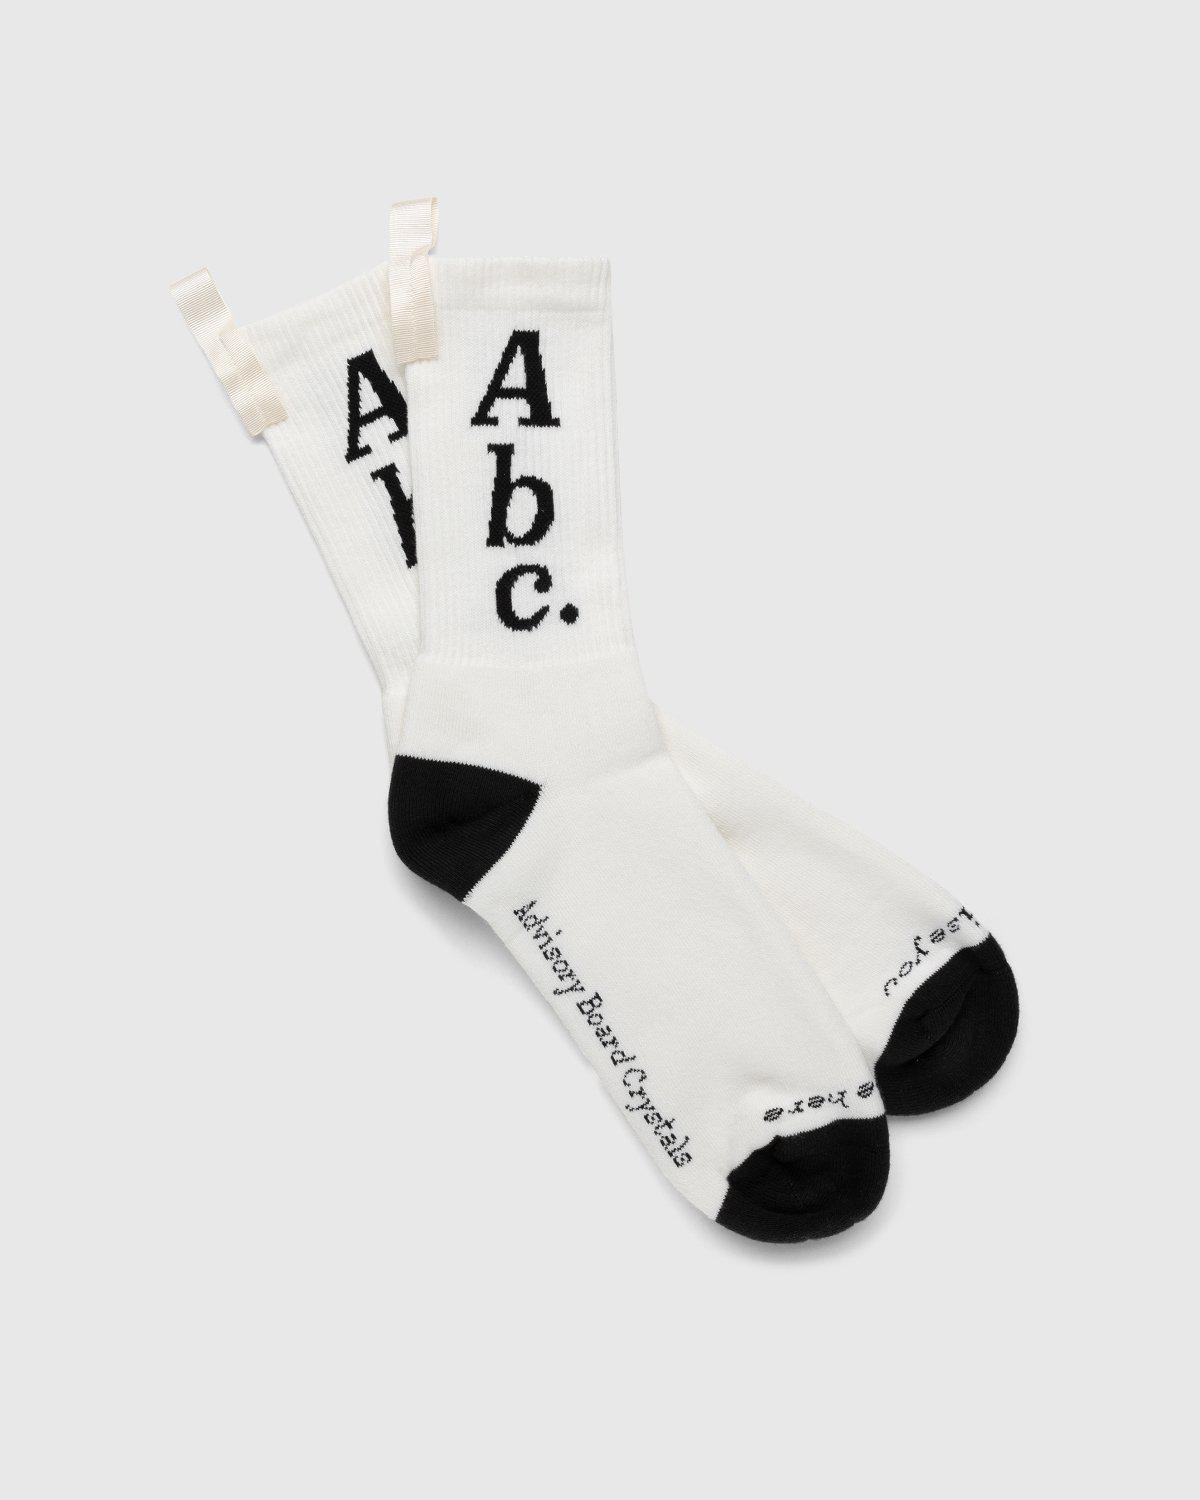 Abc. – Crew Socks Selenite/Anthracite by ABC.